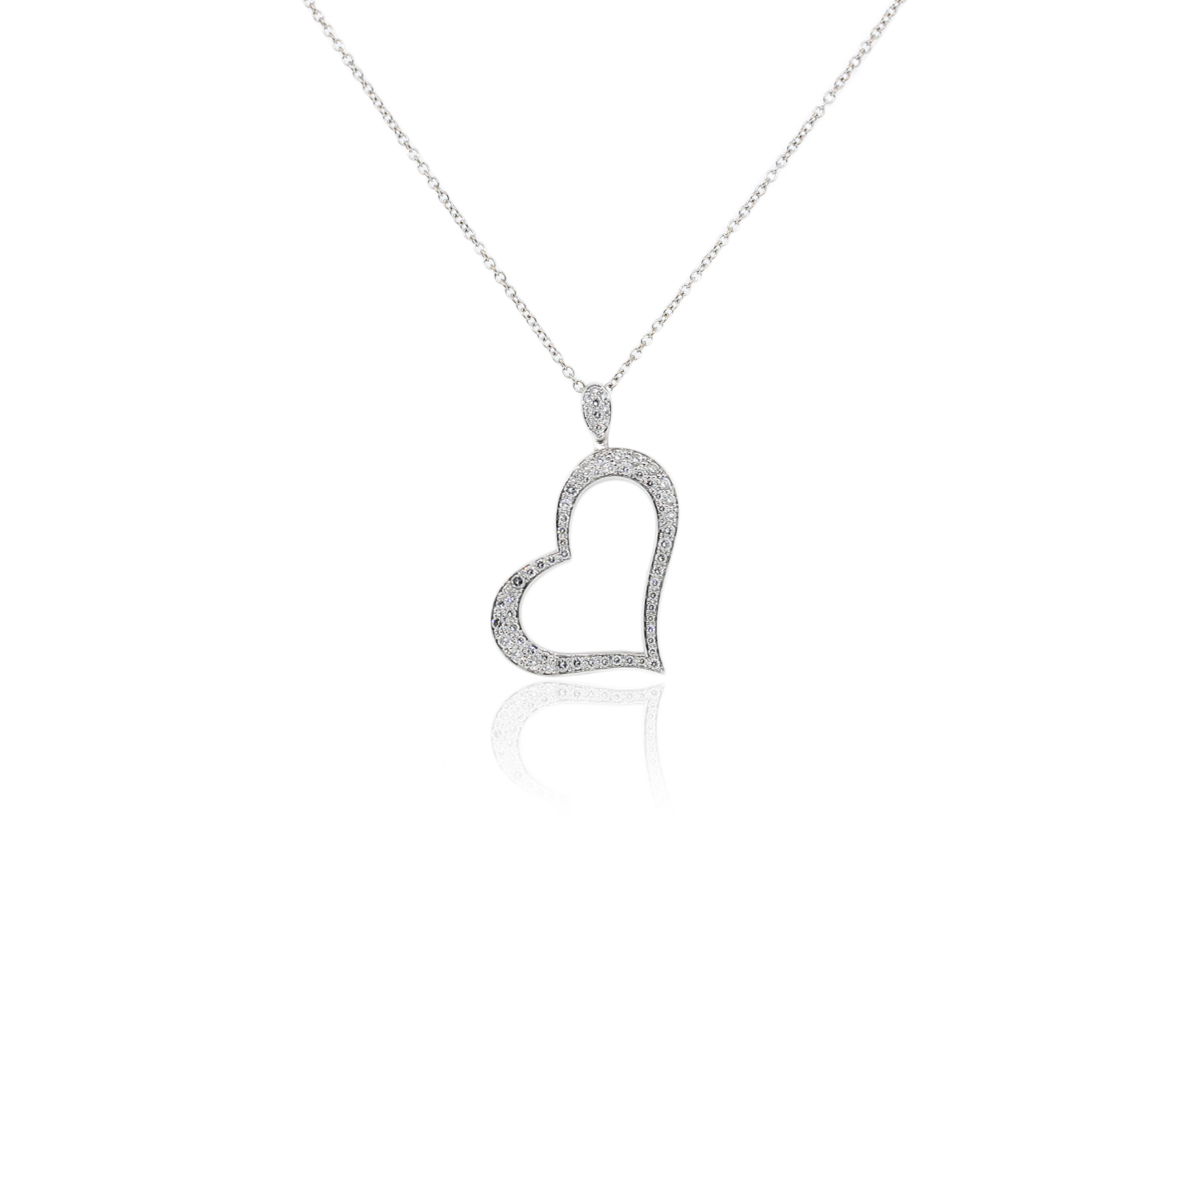 1.5 carat Diamond Pendant Necklace Jewelry Heart Shaped White Gold 8mm  Heart HMD 